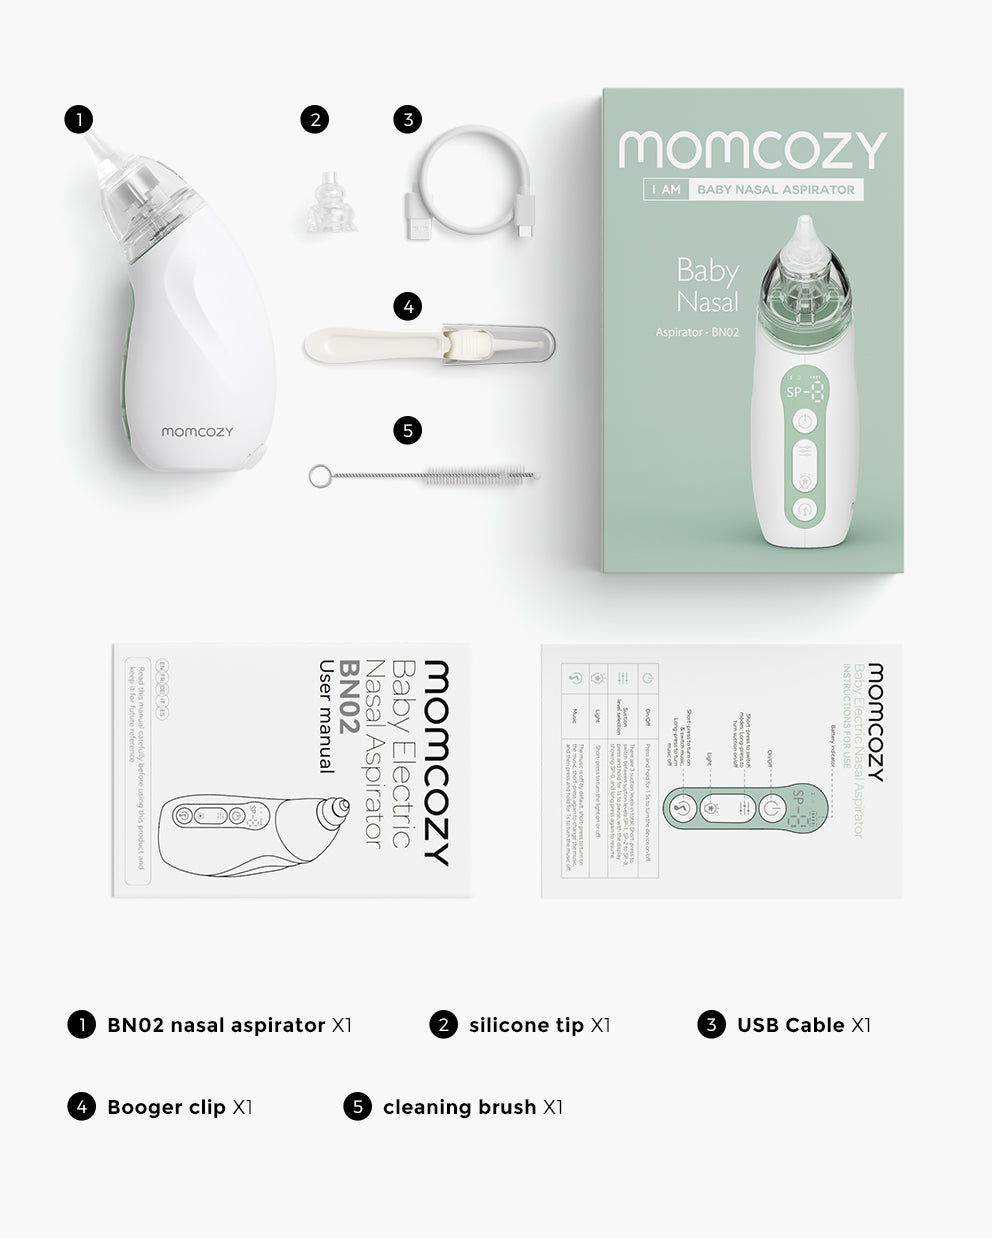 Momcozy Baby Nasal Aspirator- Long Battery Life